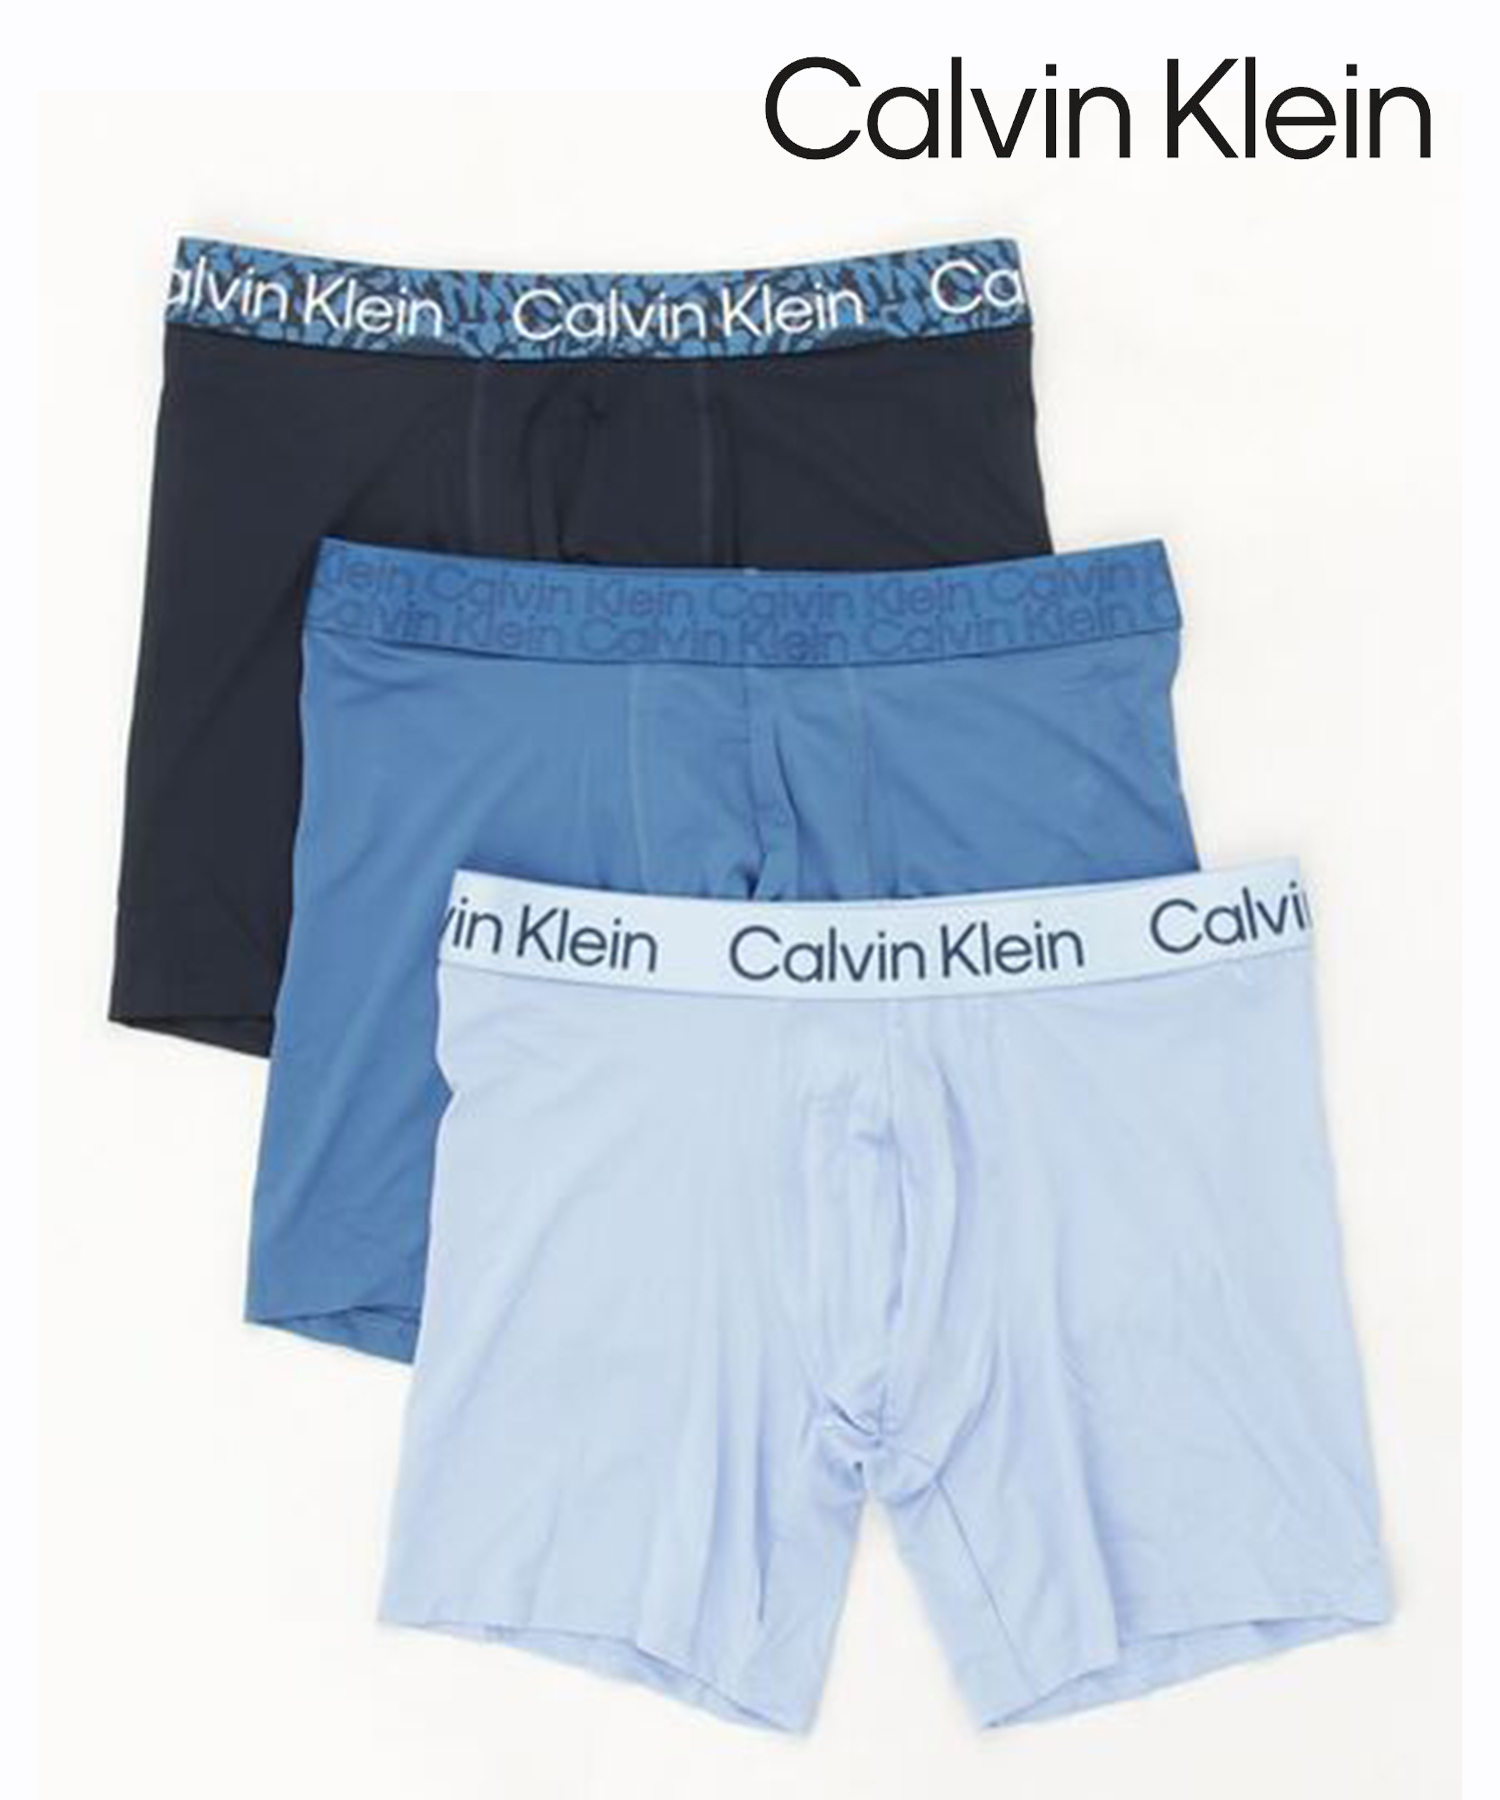 Calvin Klein/【CALVIN KLEIN / カルバンクライン】ボクサーパンツ 3枚セット NP2470O 3PK 460 父の日 ギフト プレゼント 贈り物/505108458